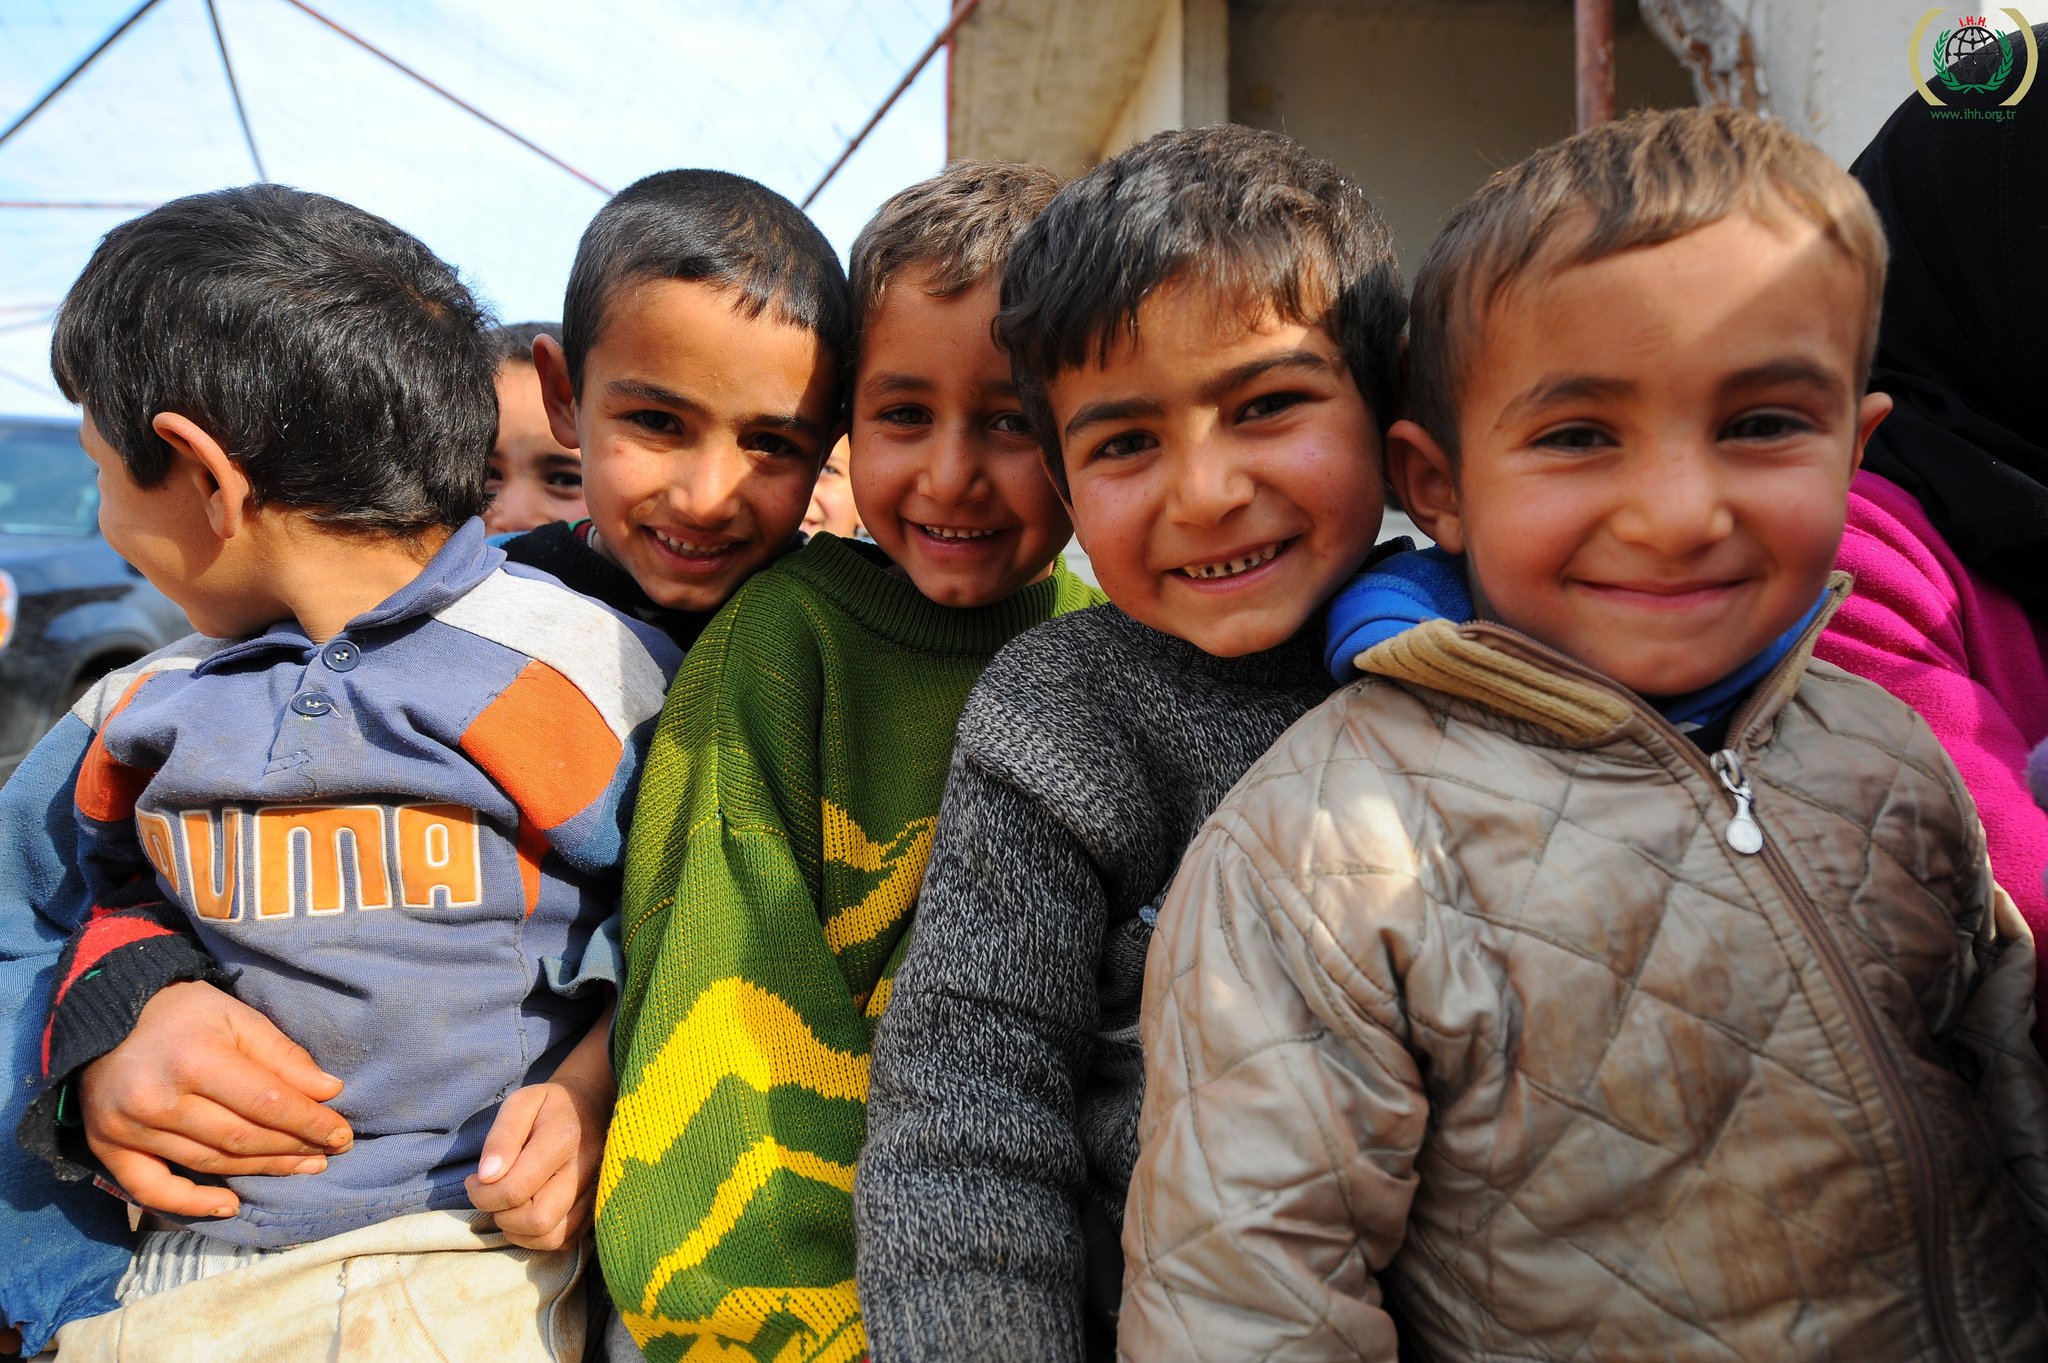 A relief effort for Syrian refugees, March 2012. (Flickr / Mustafa Öztürk)